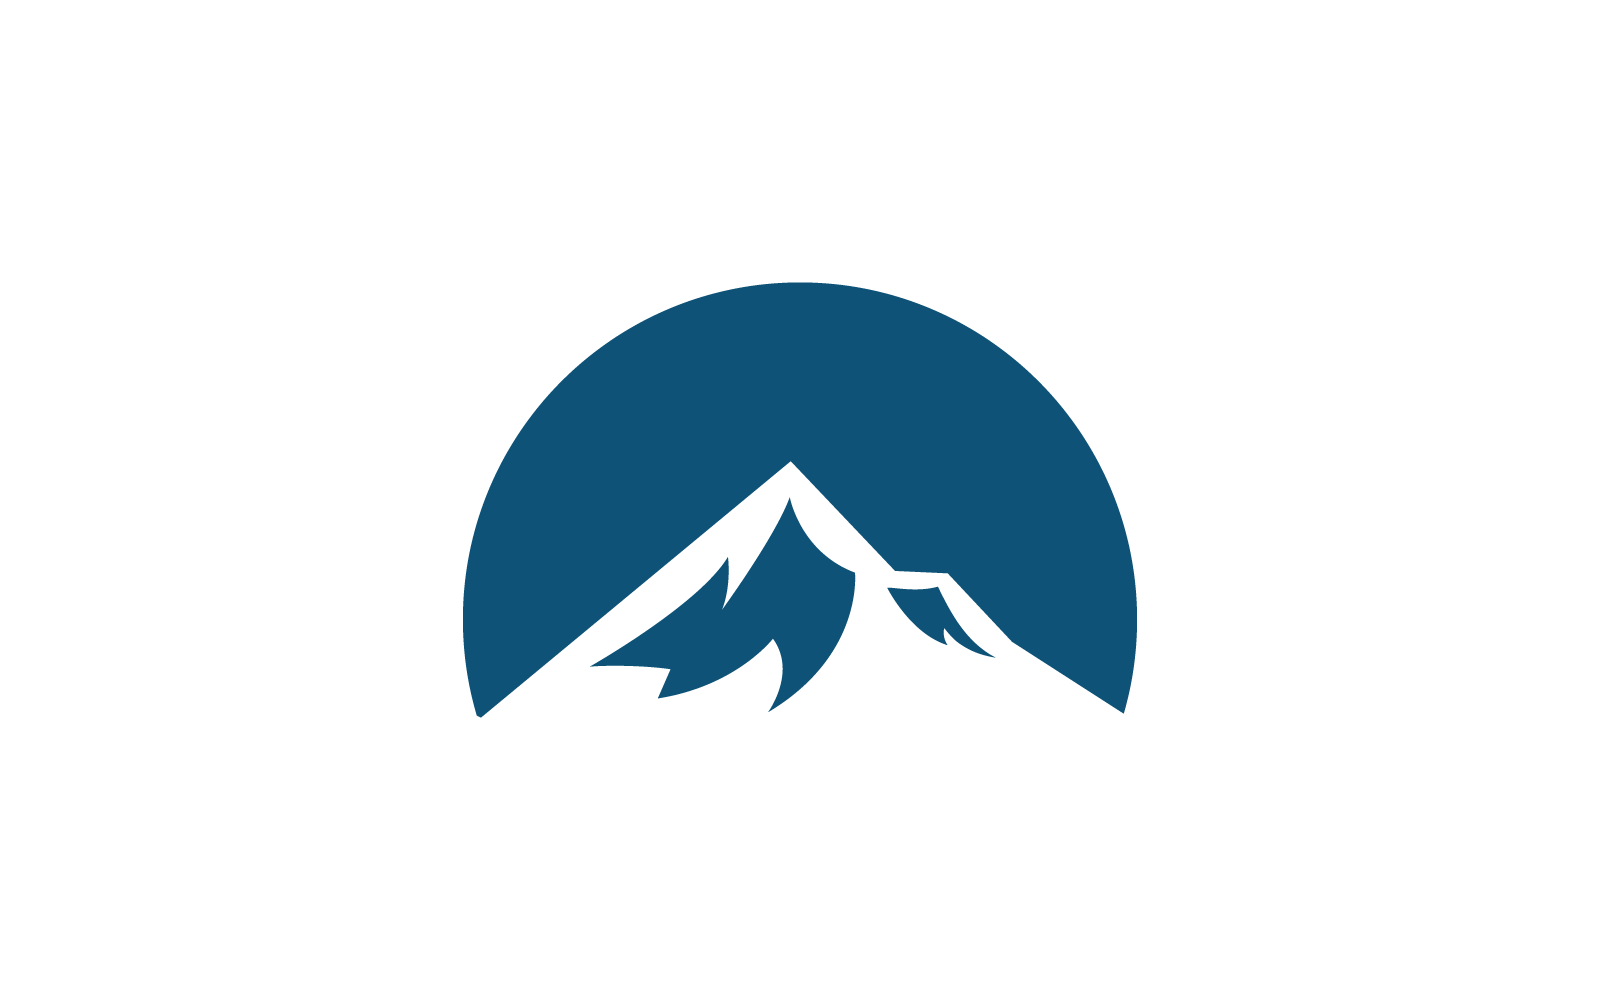 Mountain vector design illustration logo